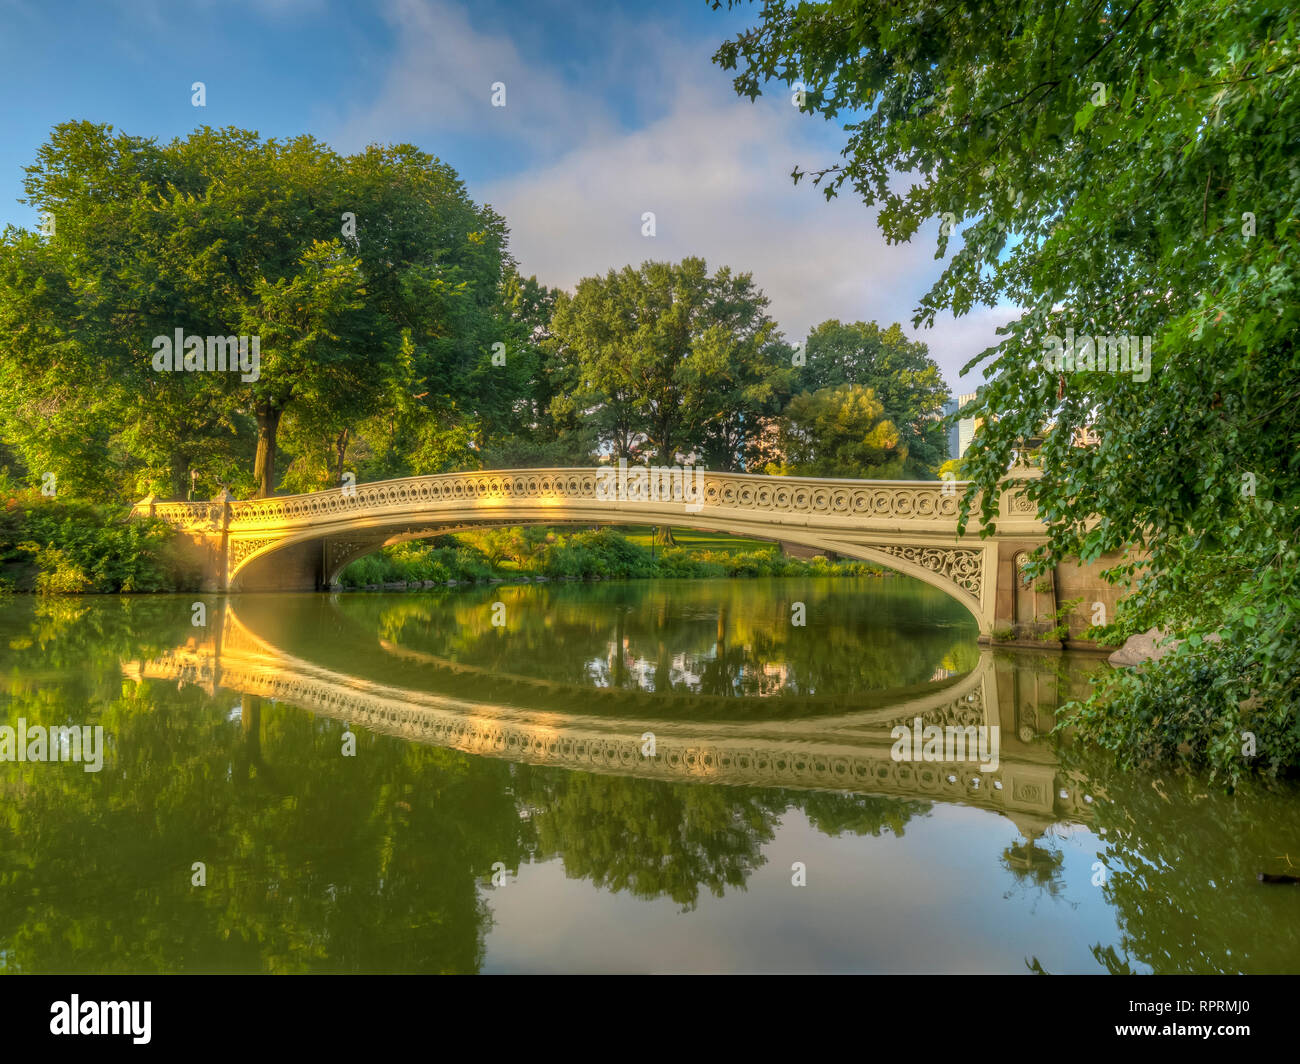 Bow Bridge in New York City, Central Park Manhattan Stock Photo - Alamy